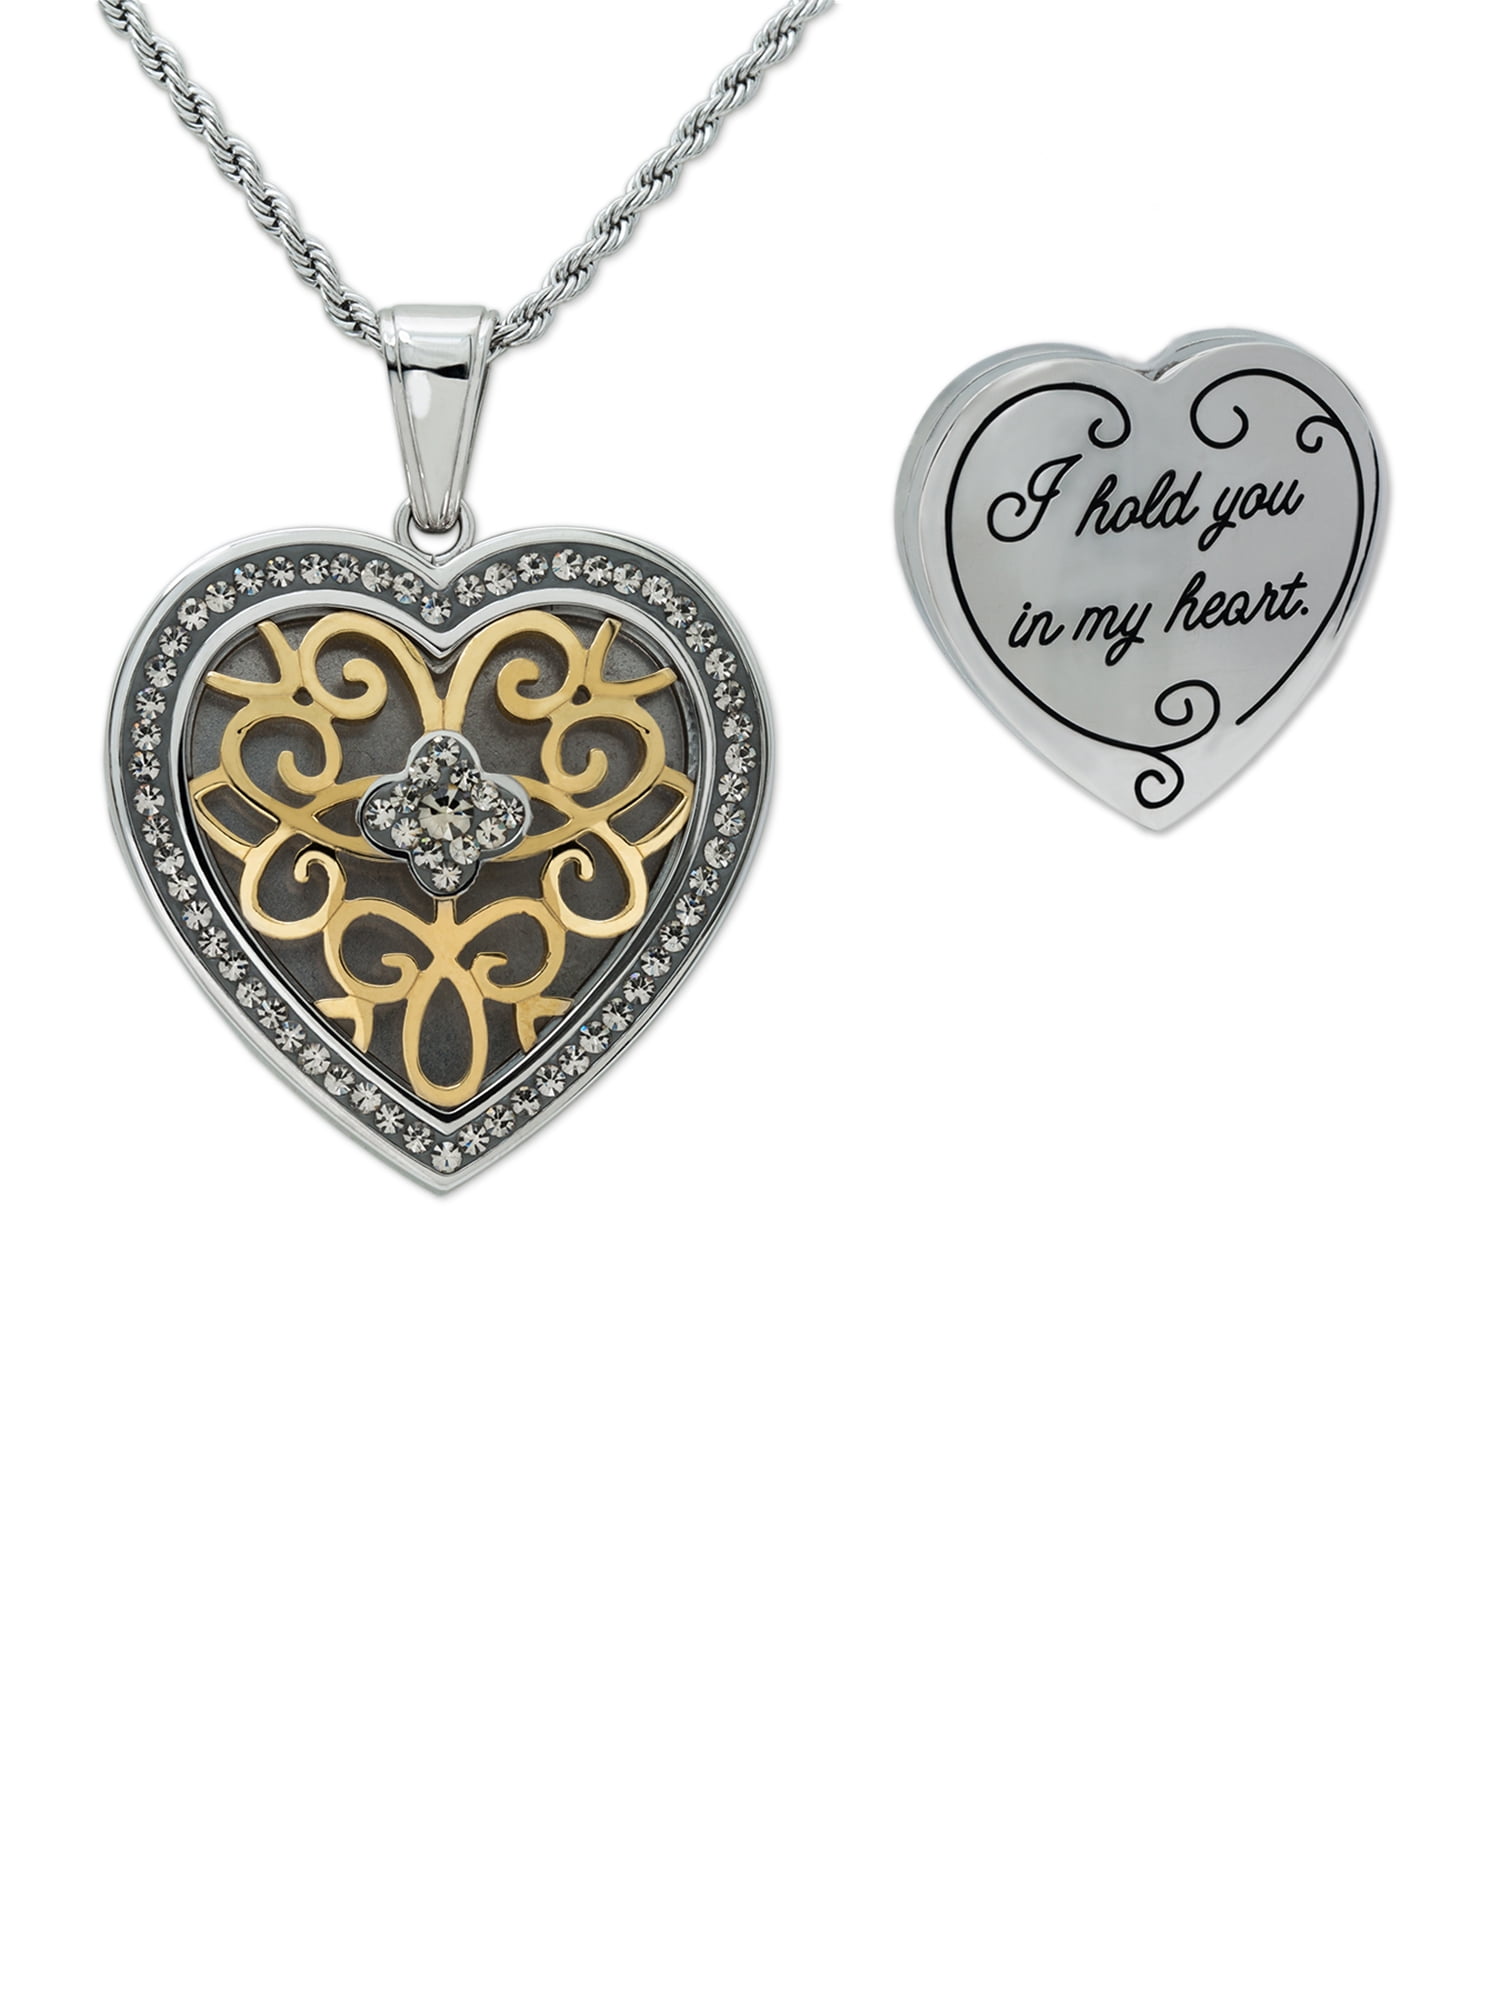 New 18K White Gold GF Filigree Crystal Heart Locket Charm Pendant Necklace Gift 